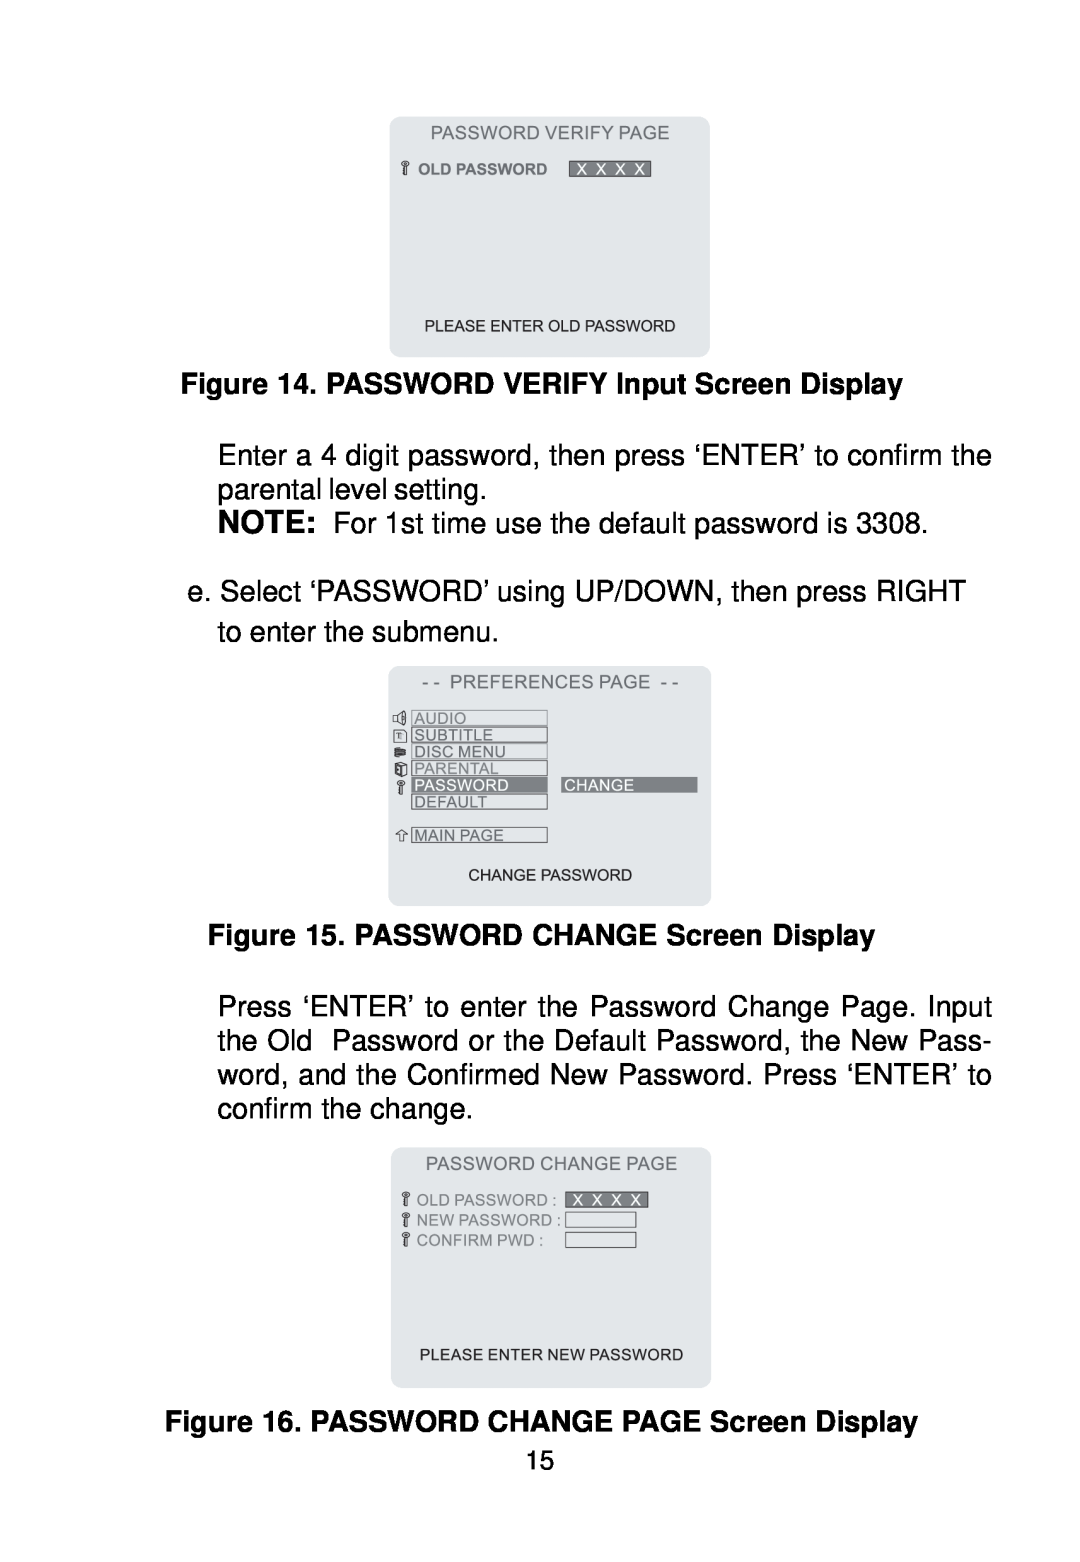 Audiovox VBP58 PASSWORD VERIFY Input Screen Display, PASSWORD CHANGE Screen Display, PASSWORD CHANGE PAGE Screen Display 